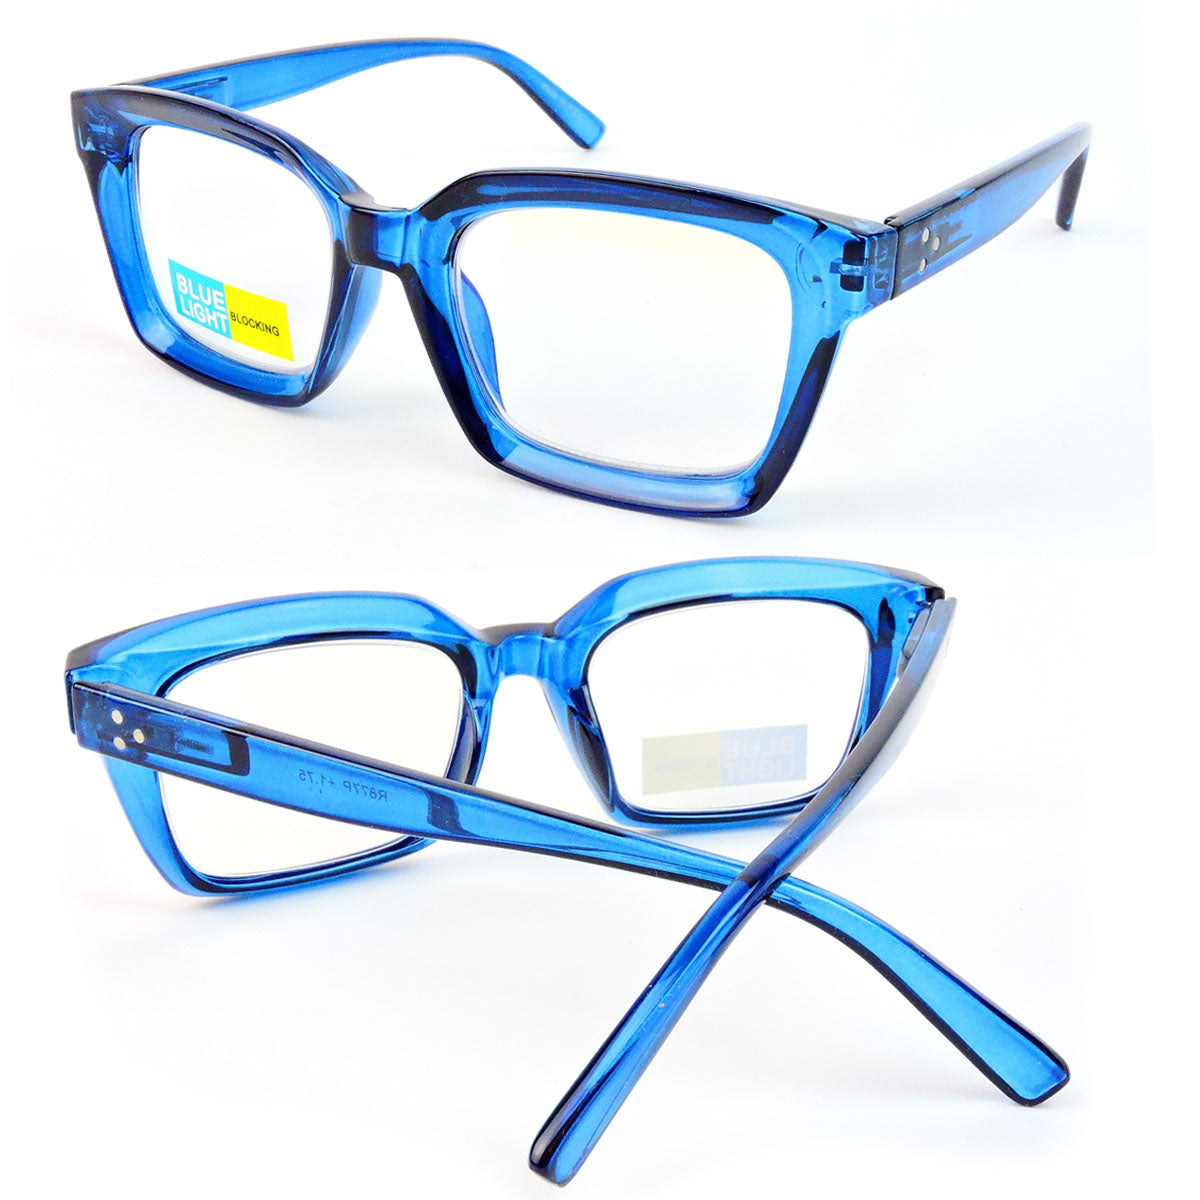 Blue Light Blocking Glasses Thick Rectangle Preppy Look - Reading Glasses - Tortoise, +1.50